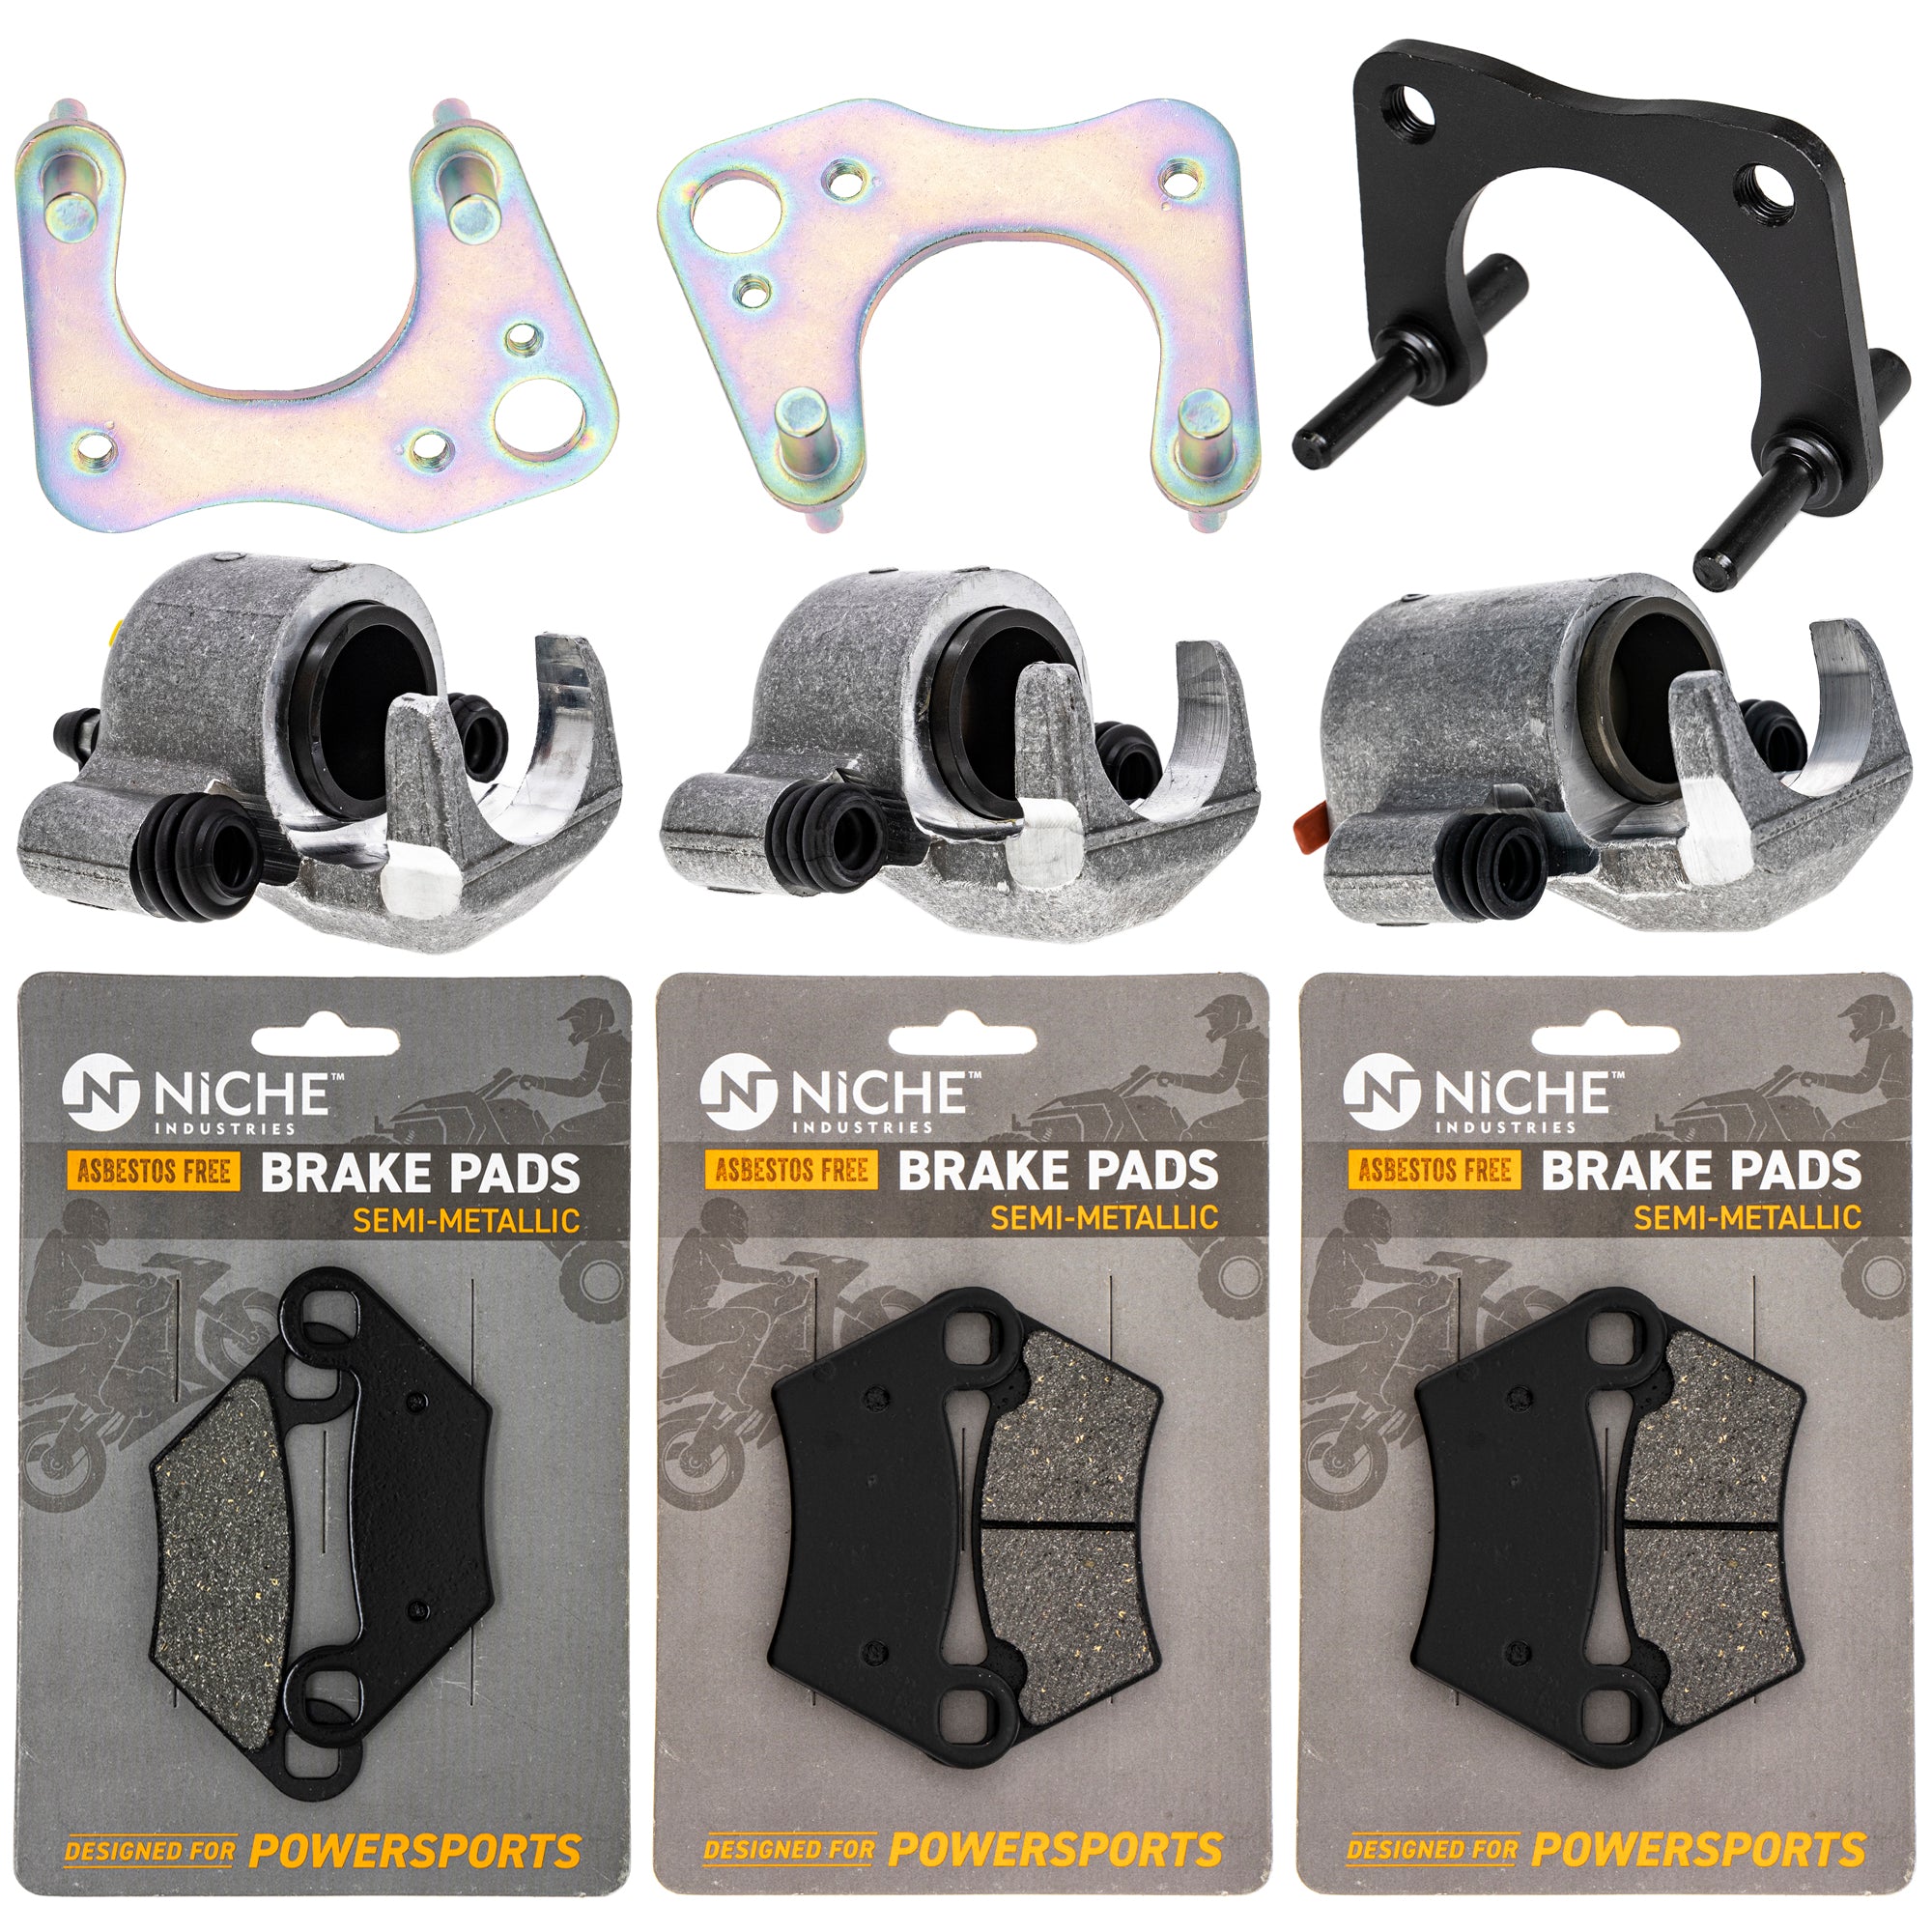 Brake Rebuild Kit Calipers & Pads (3) for zOTHER Polaris GEM Sportsman NICHE MK1008200